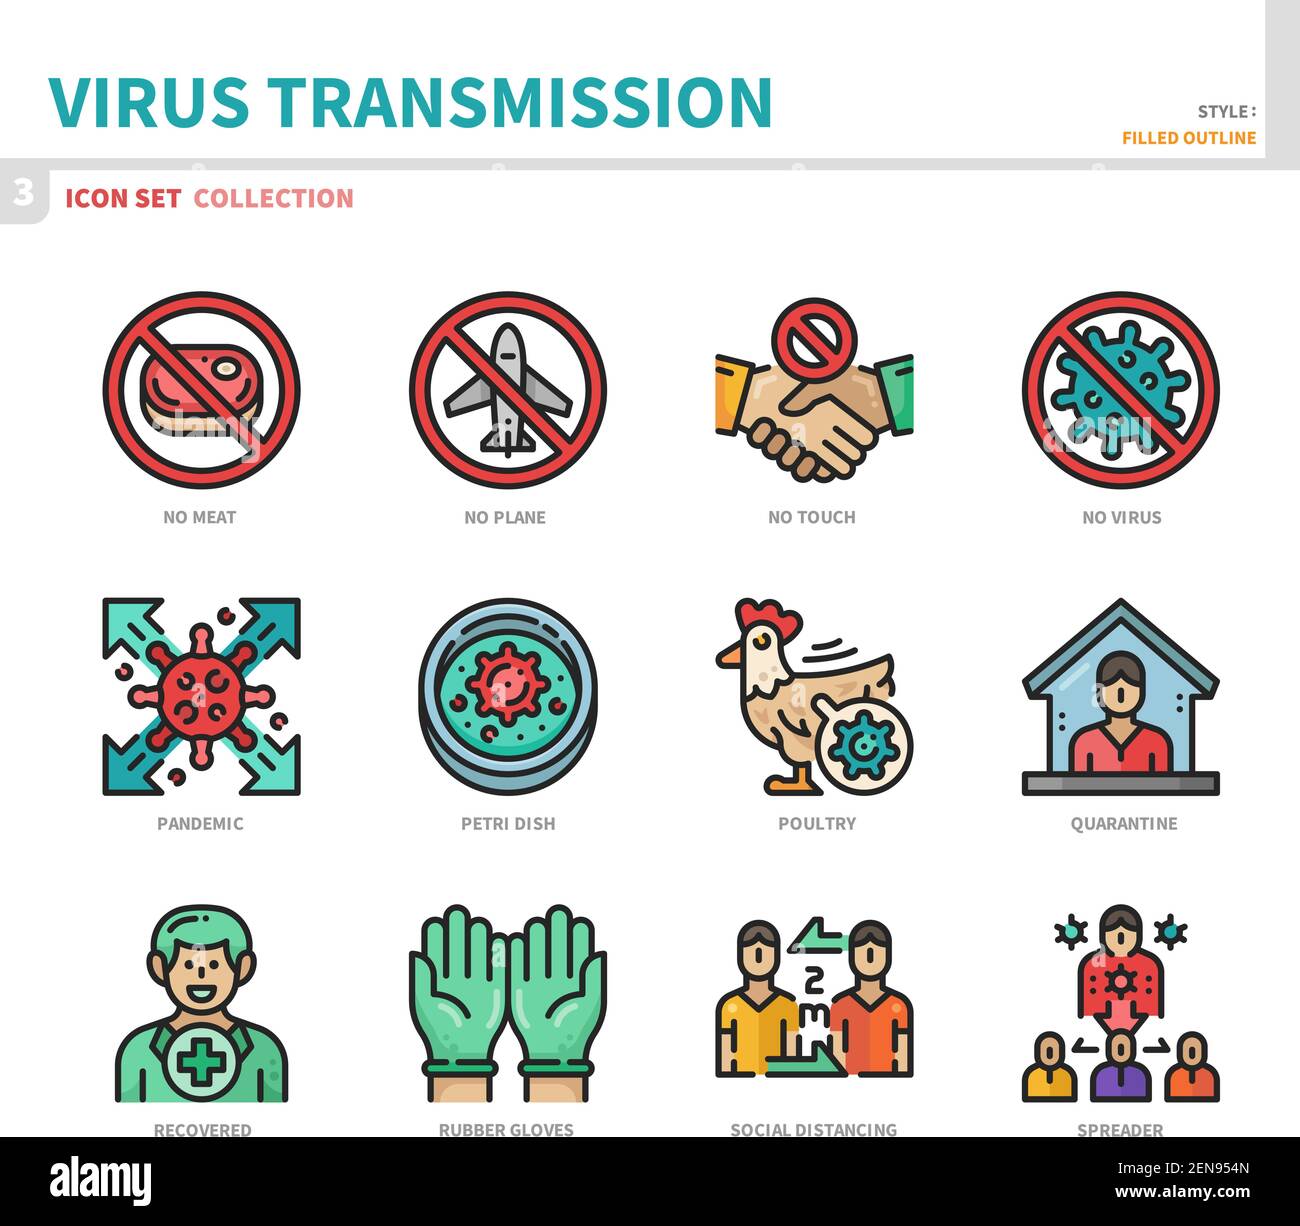 virus transmission,coronavirus,covid19 icon set,vector and illustration Stock Vector